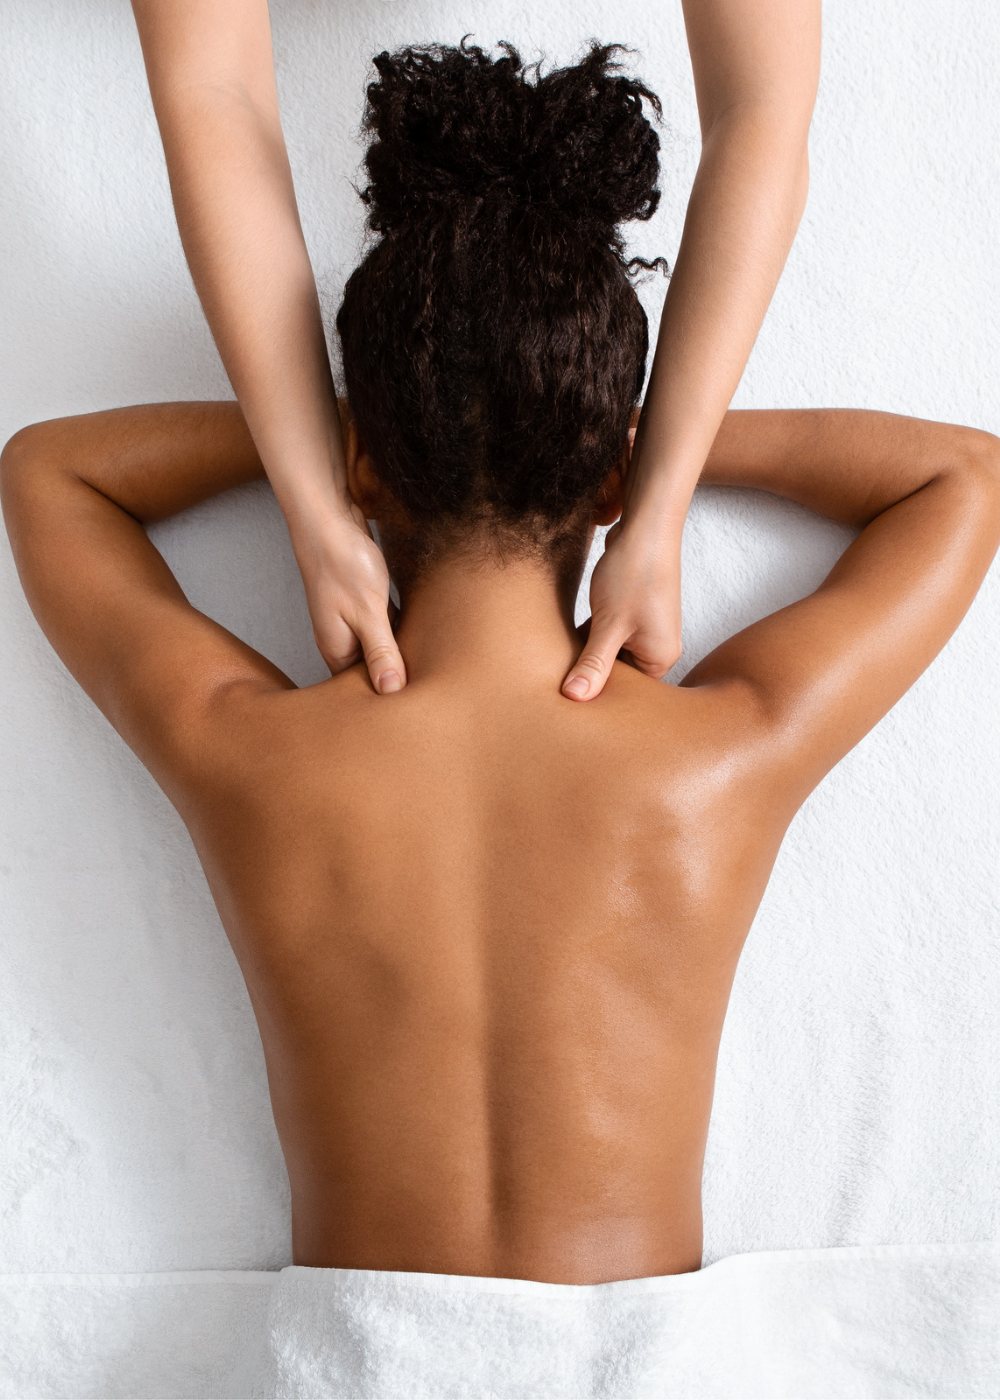 Swedish massage on female client